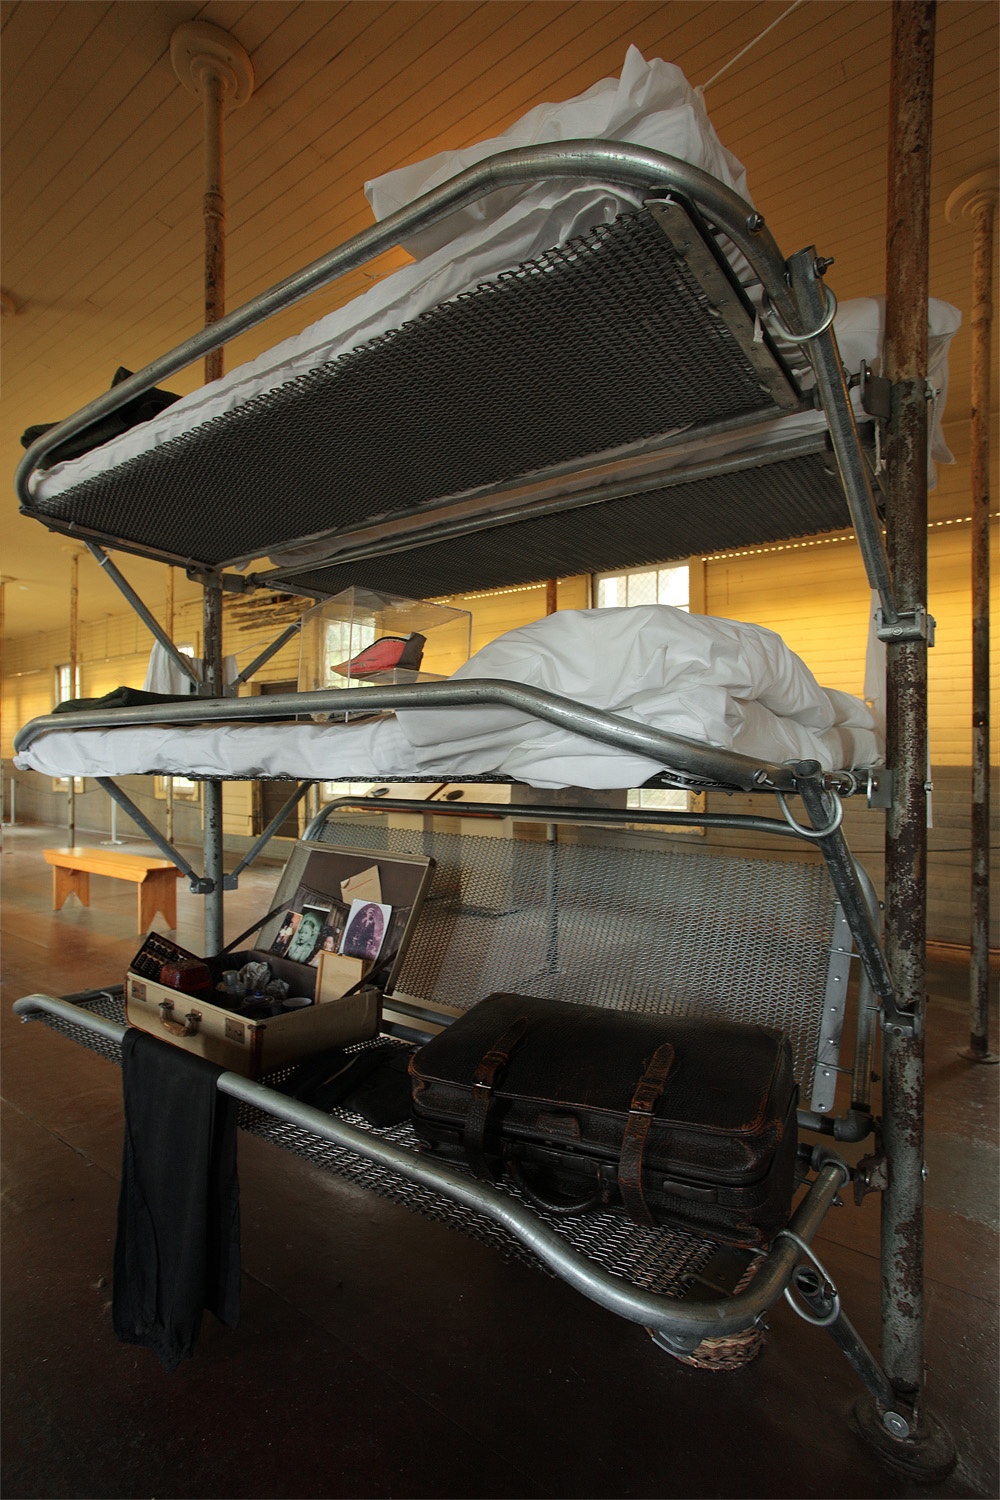 bill-hocker-exhibition-beds-immigration-station-dorm-angel-island-san-francisco-california-2012